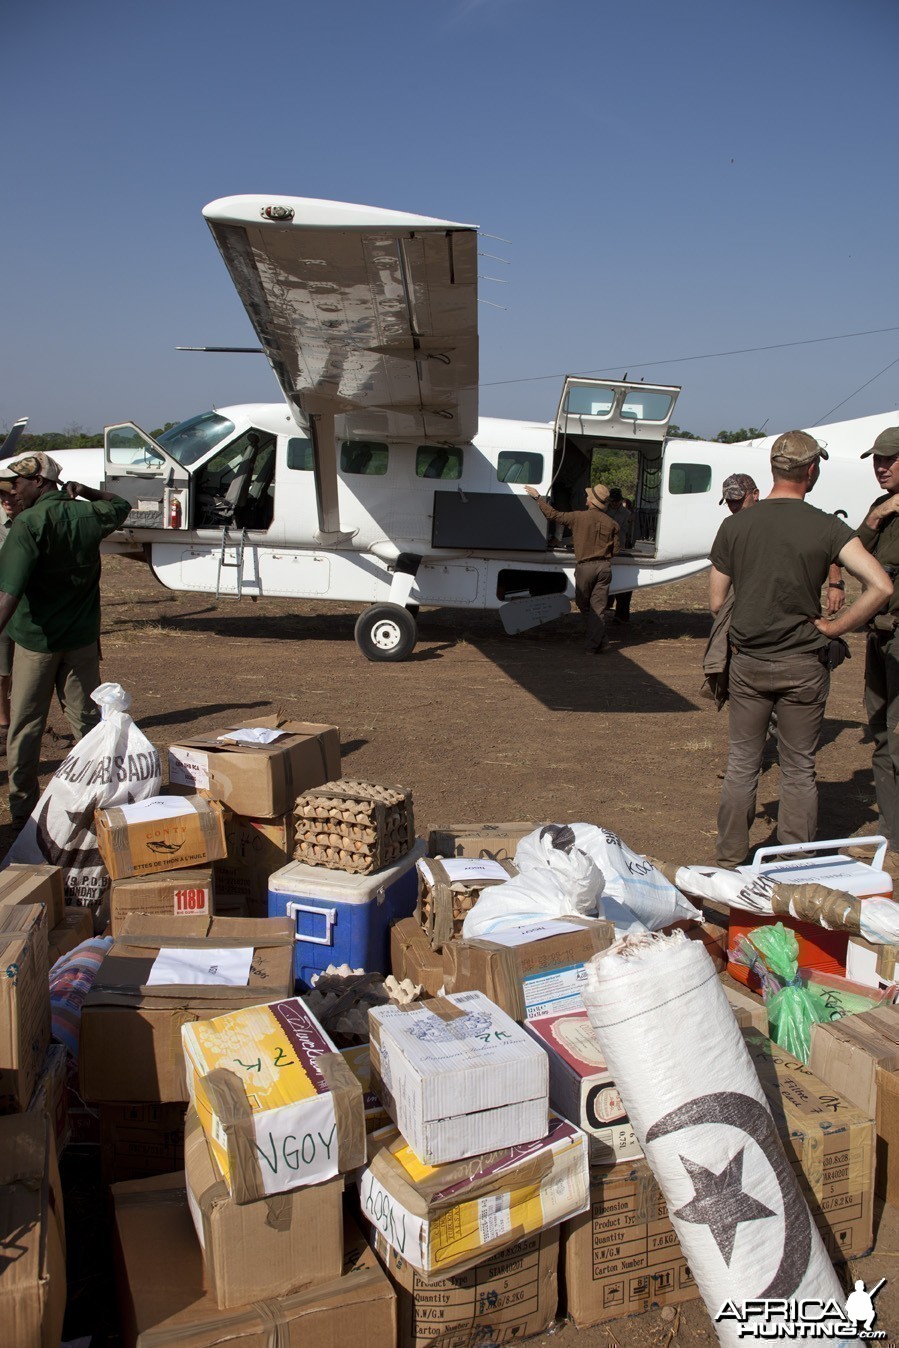 Caravan plane and supplies